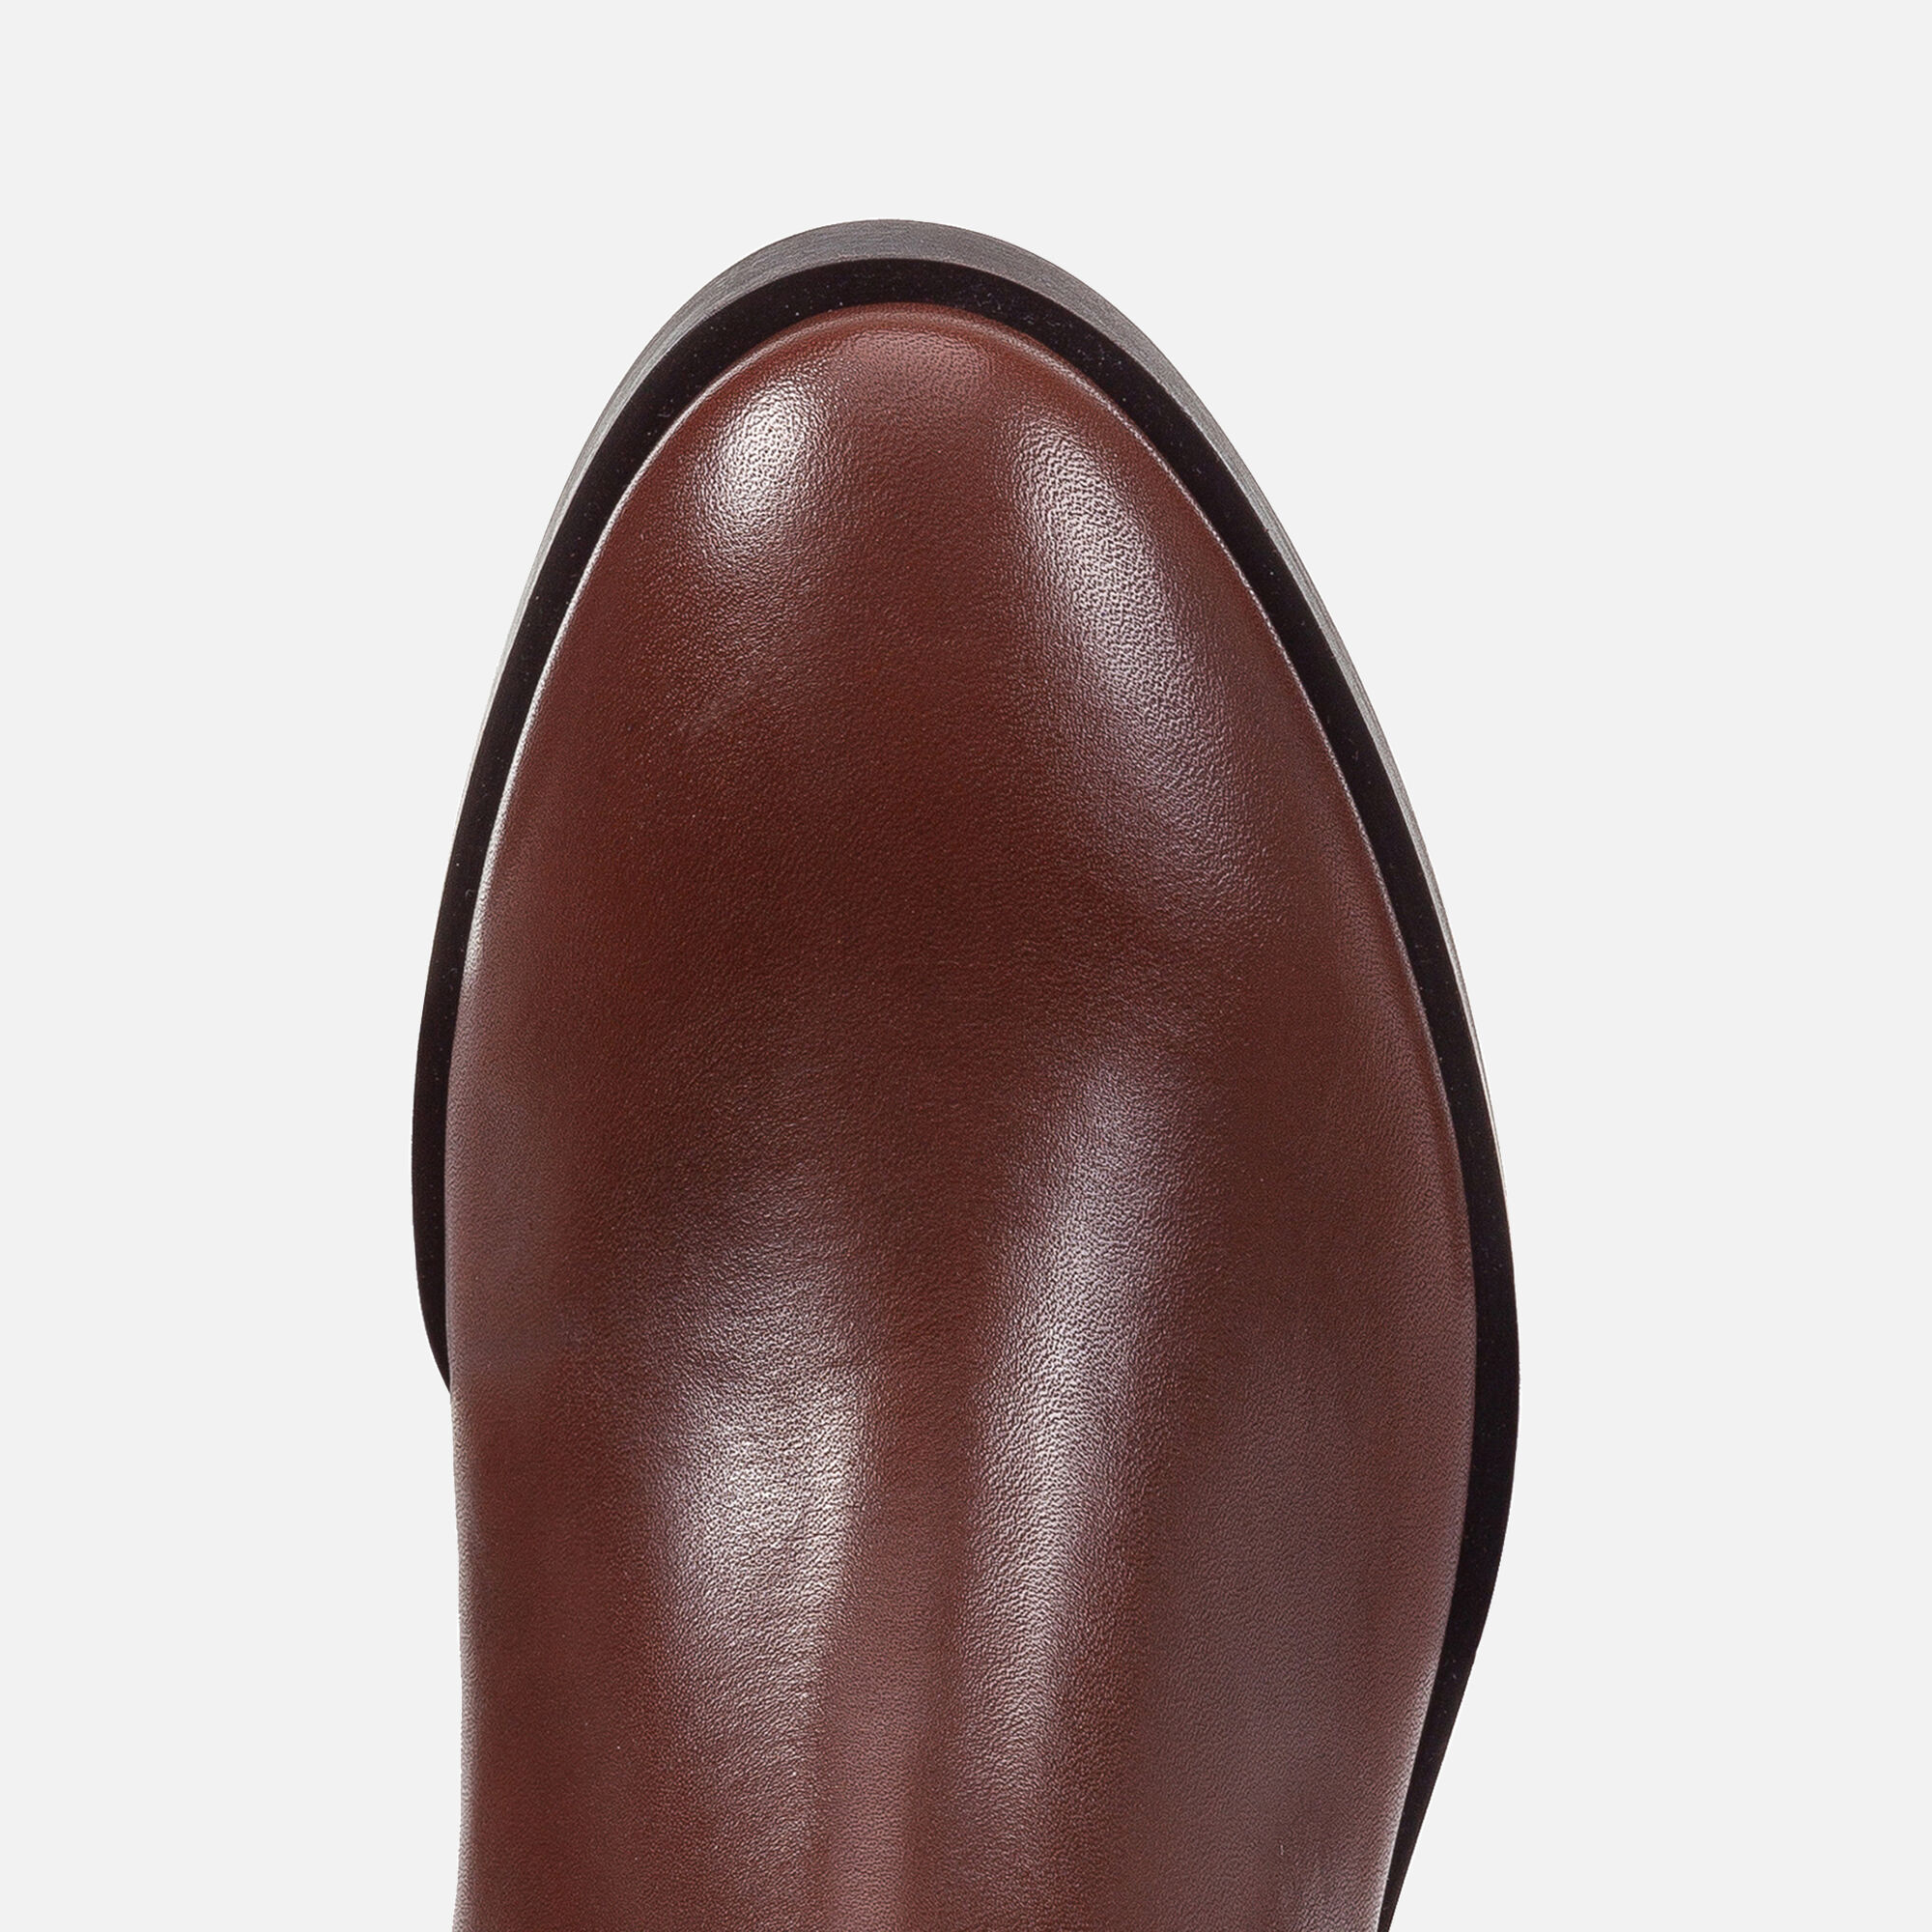 Geox® BROGUE Woman: Chestnut Boots 